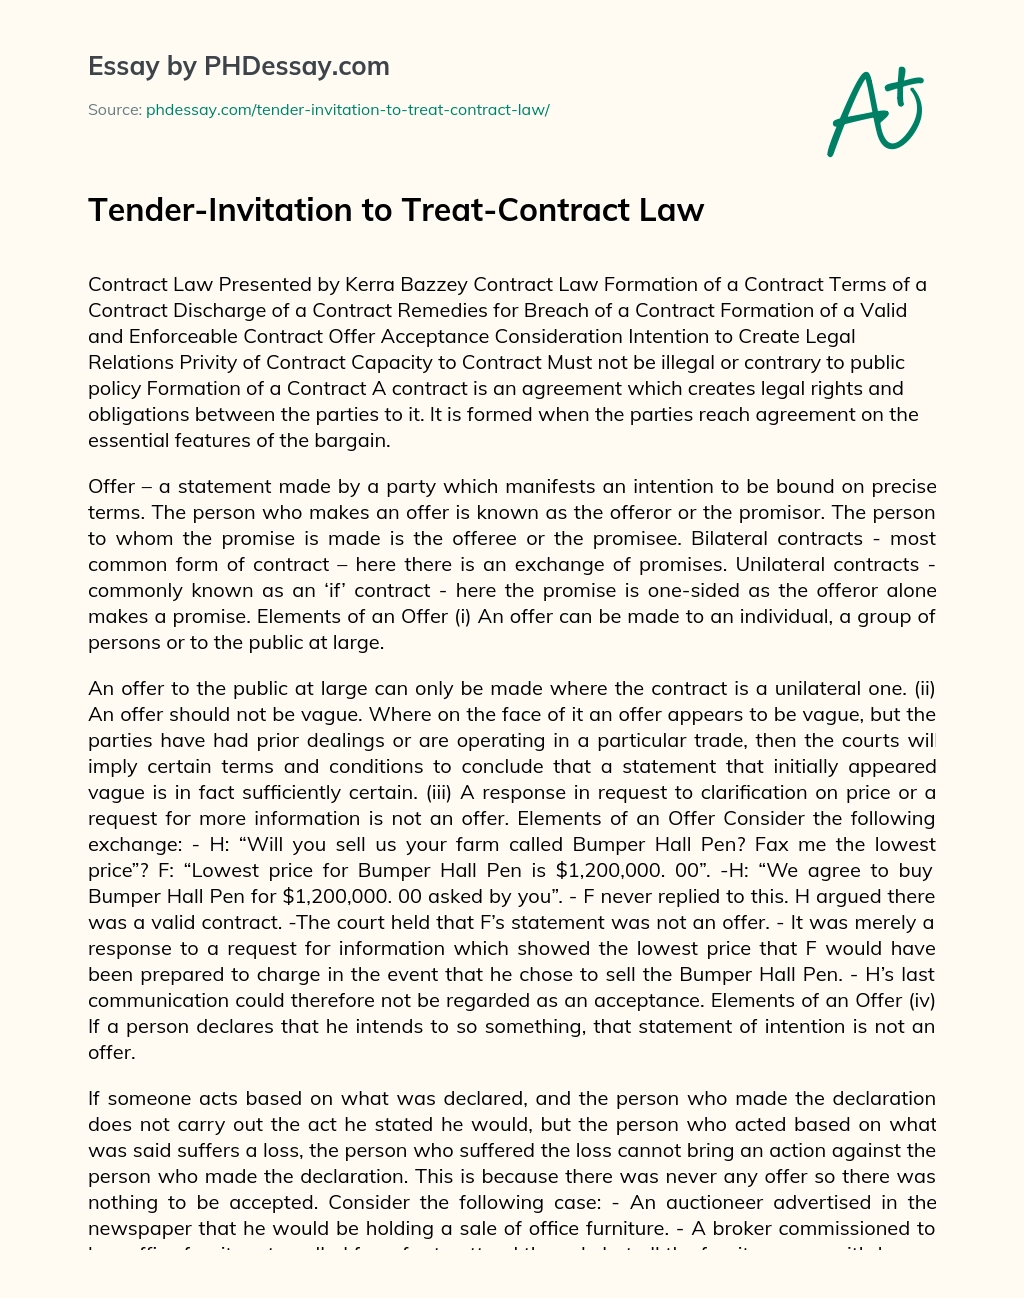 Tender-Invitation to Treat-Contract Law essay